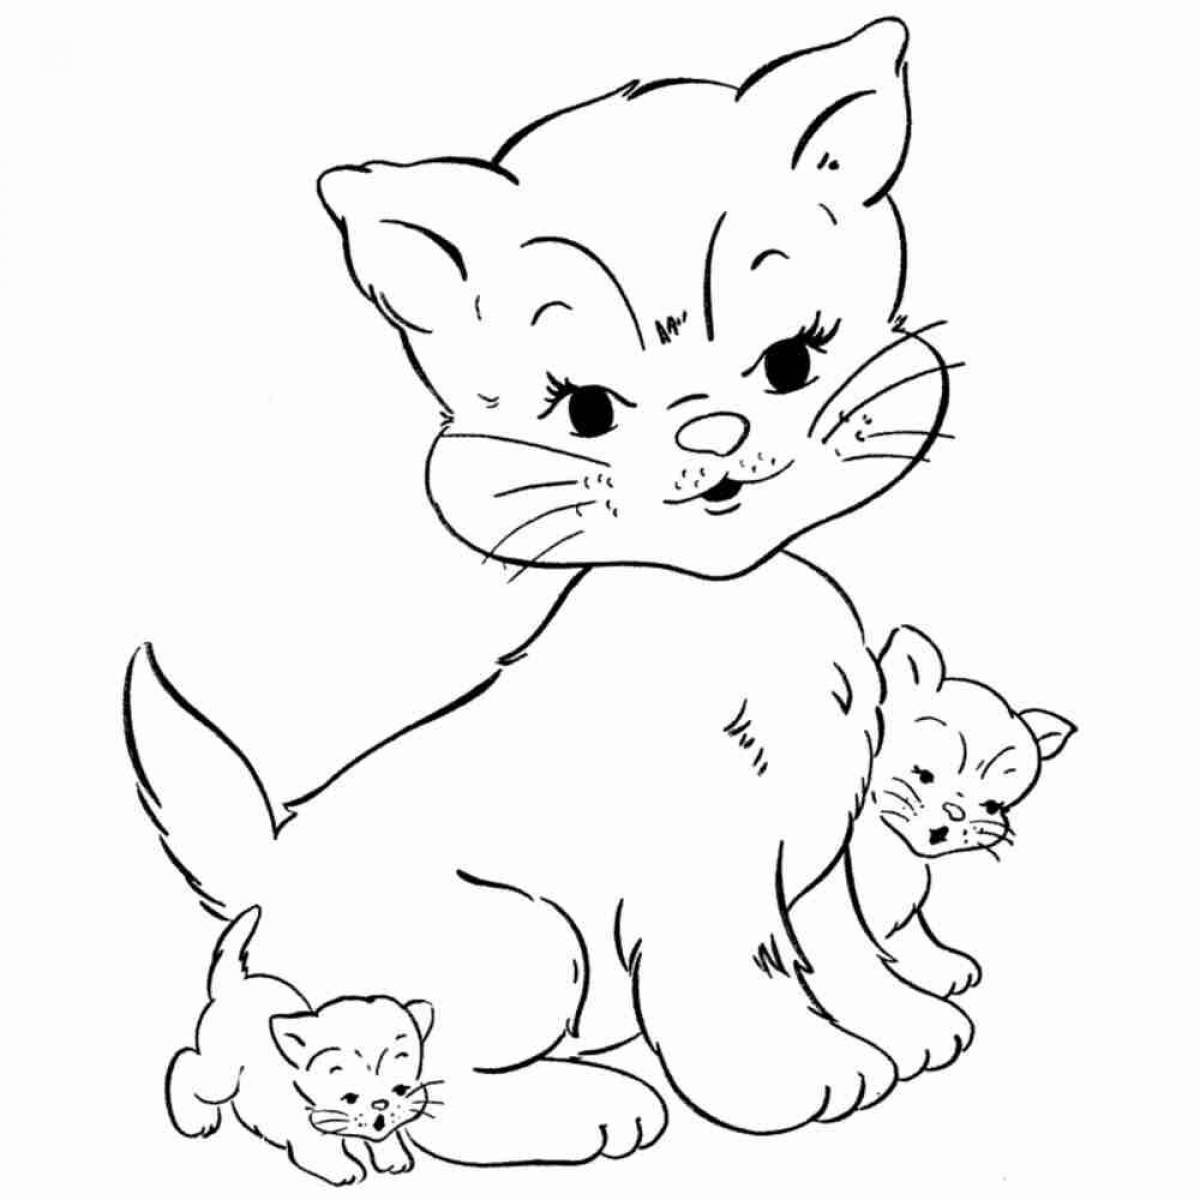 Величественная раскраска кошка с котятами